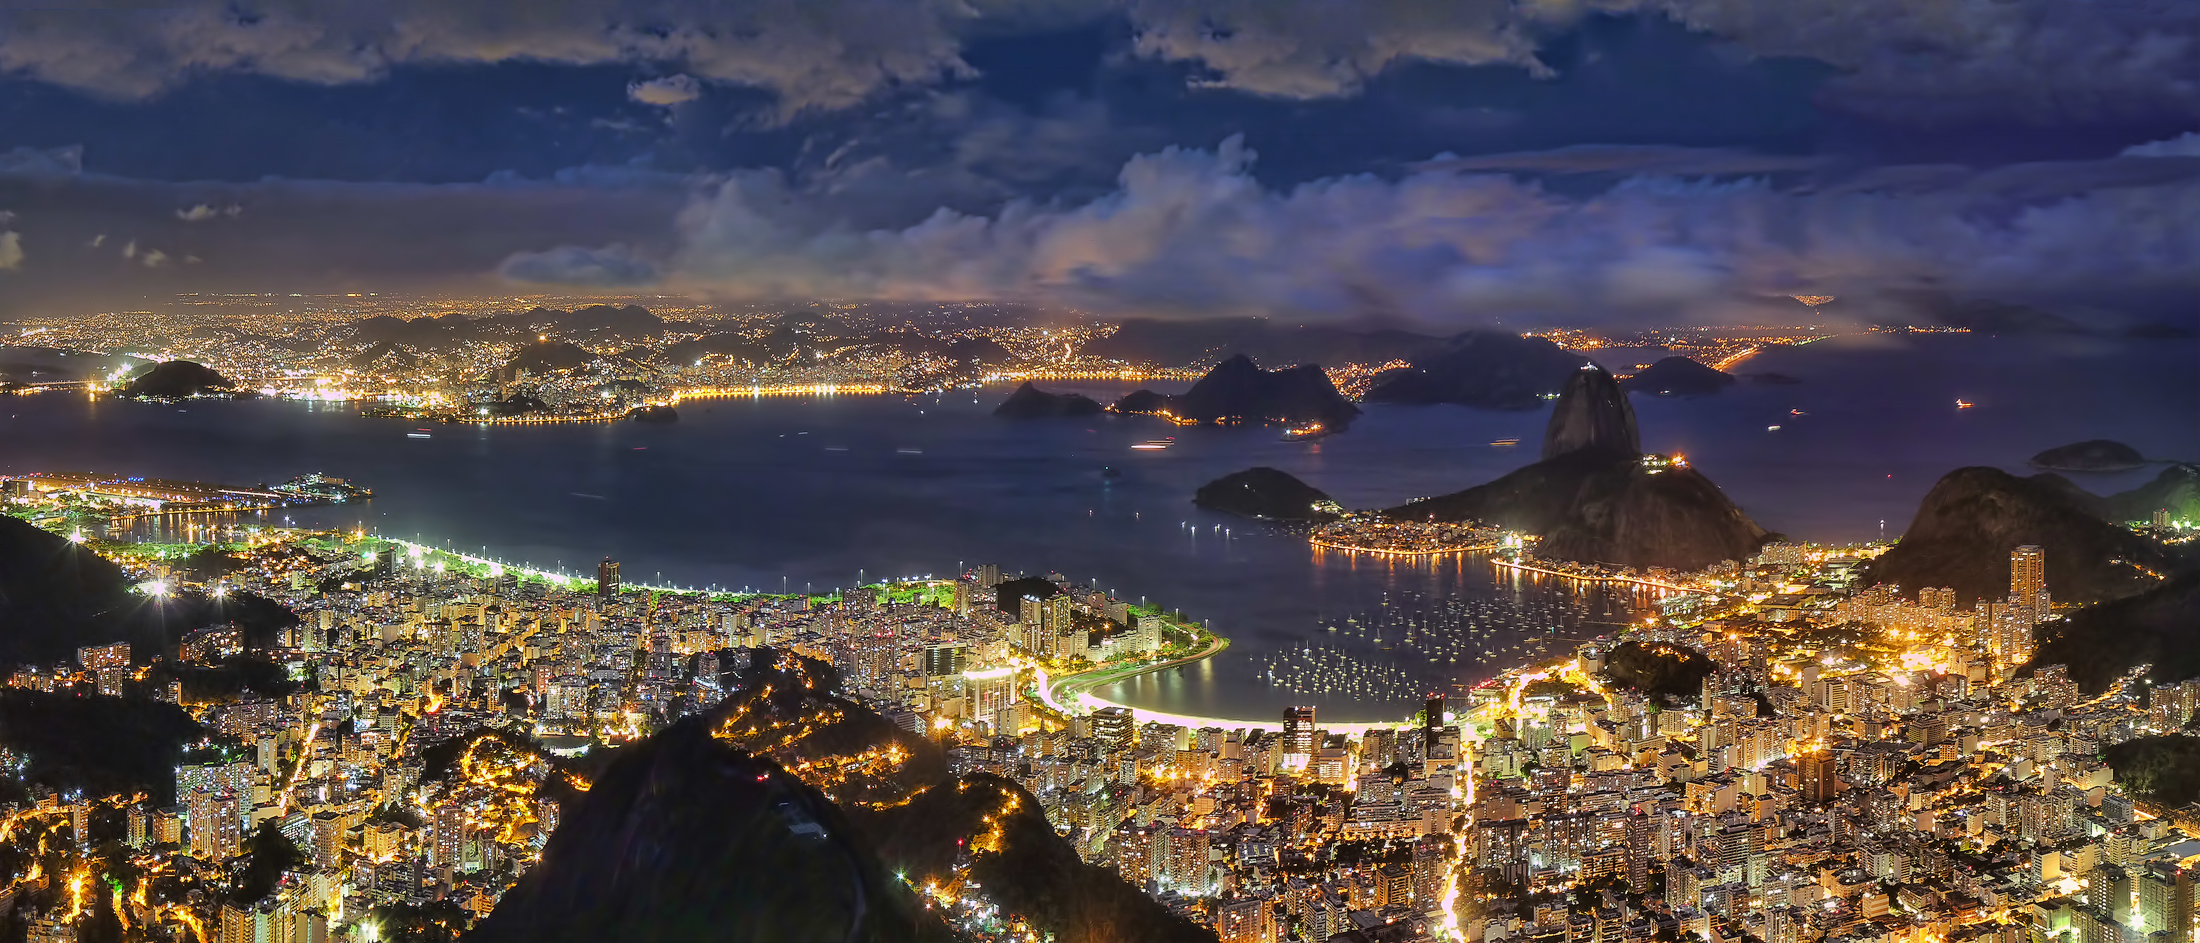 File:Rio De Janeiro - Rafael Defavari.jpg - Wikimedia Commons